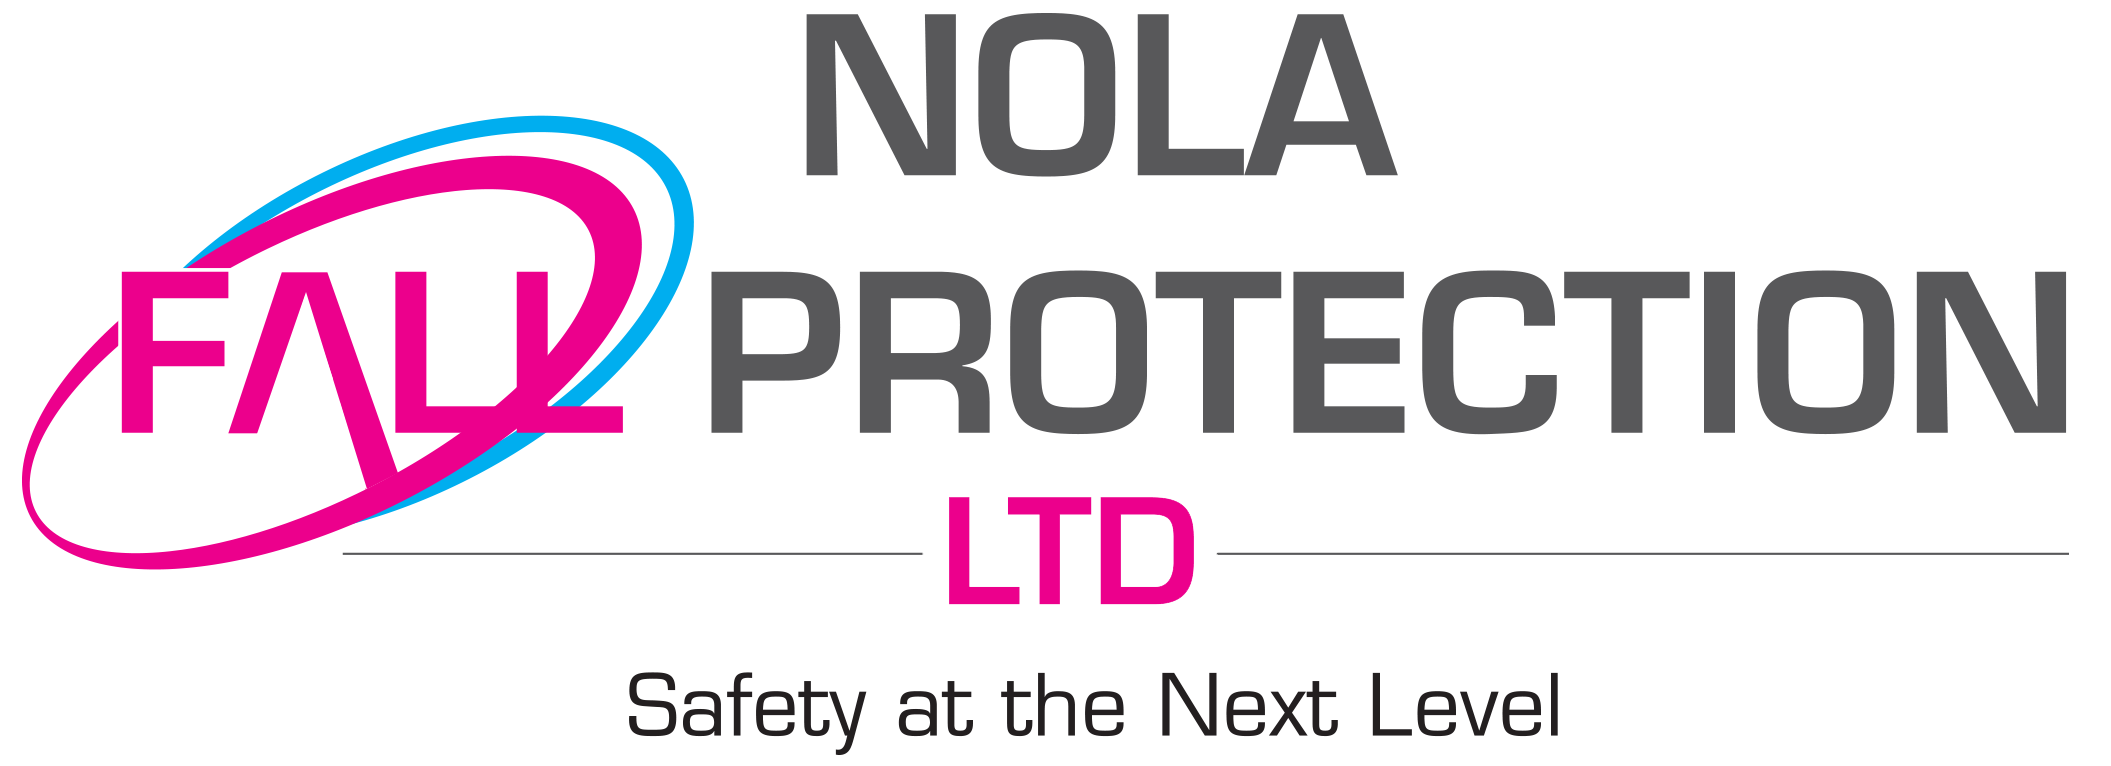 NOLA Fall Protection Solutions Ltd